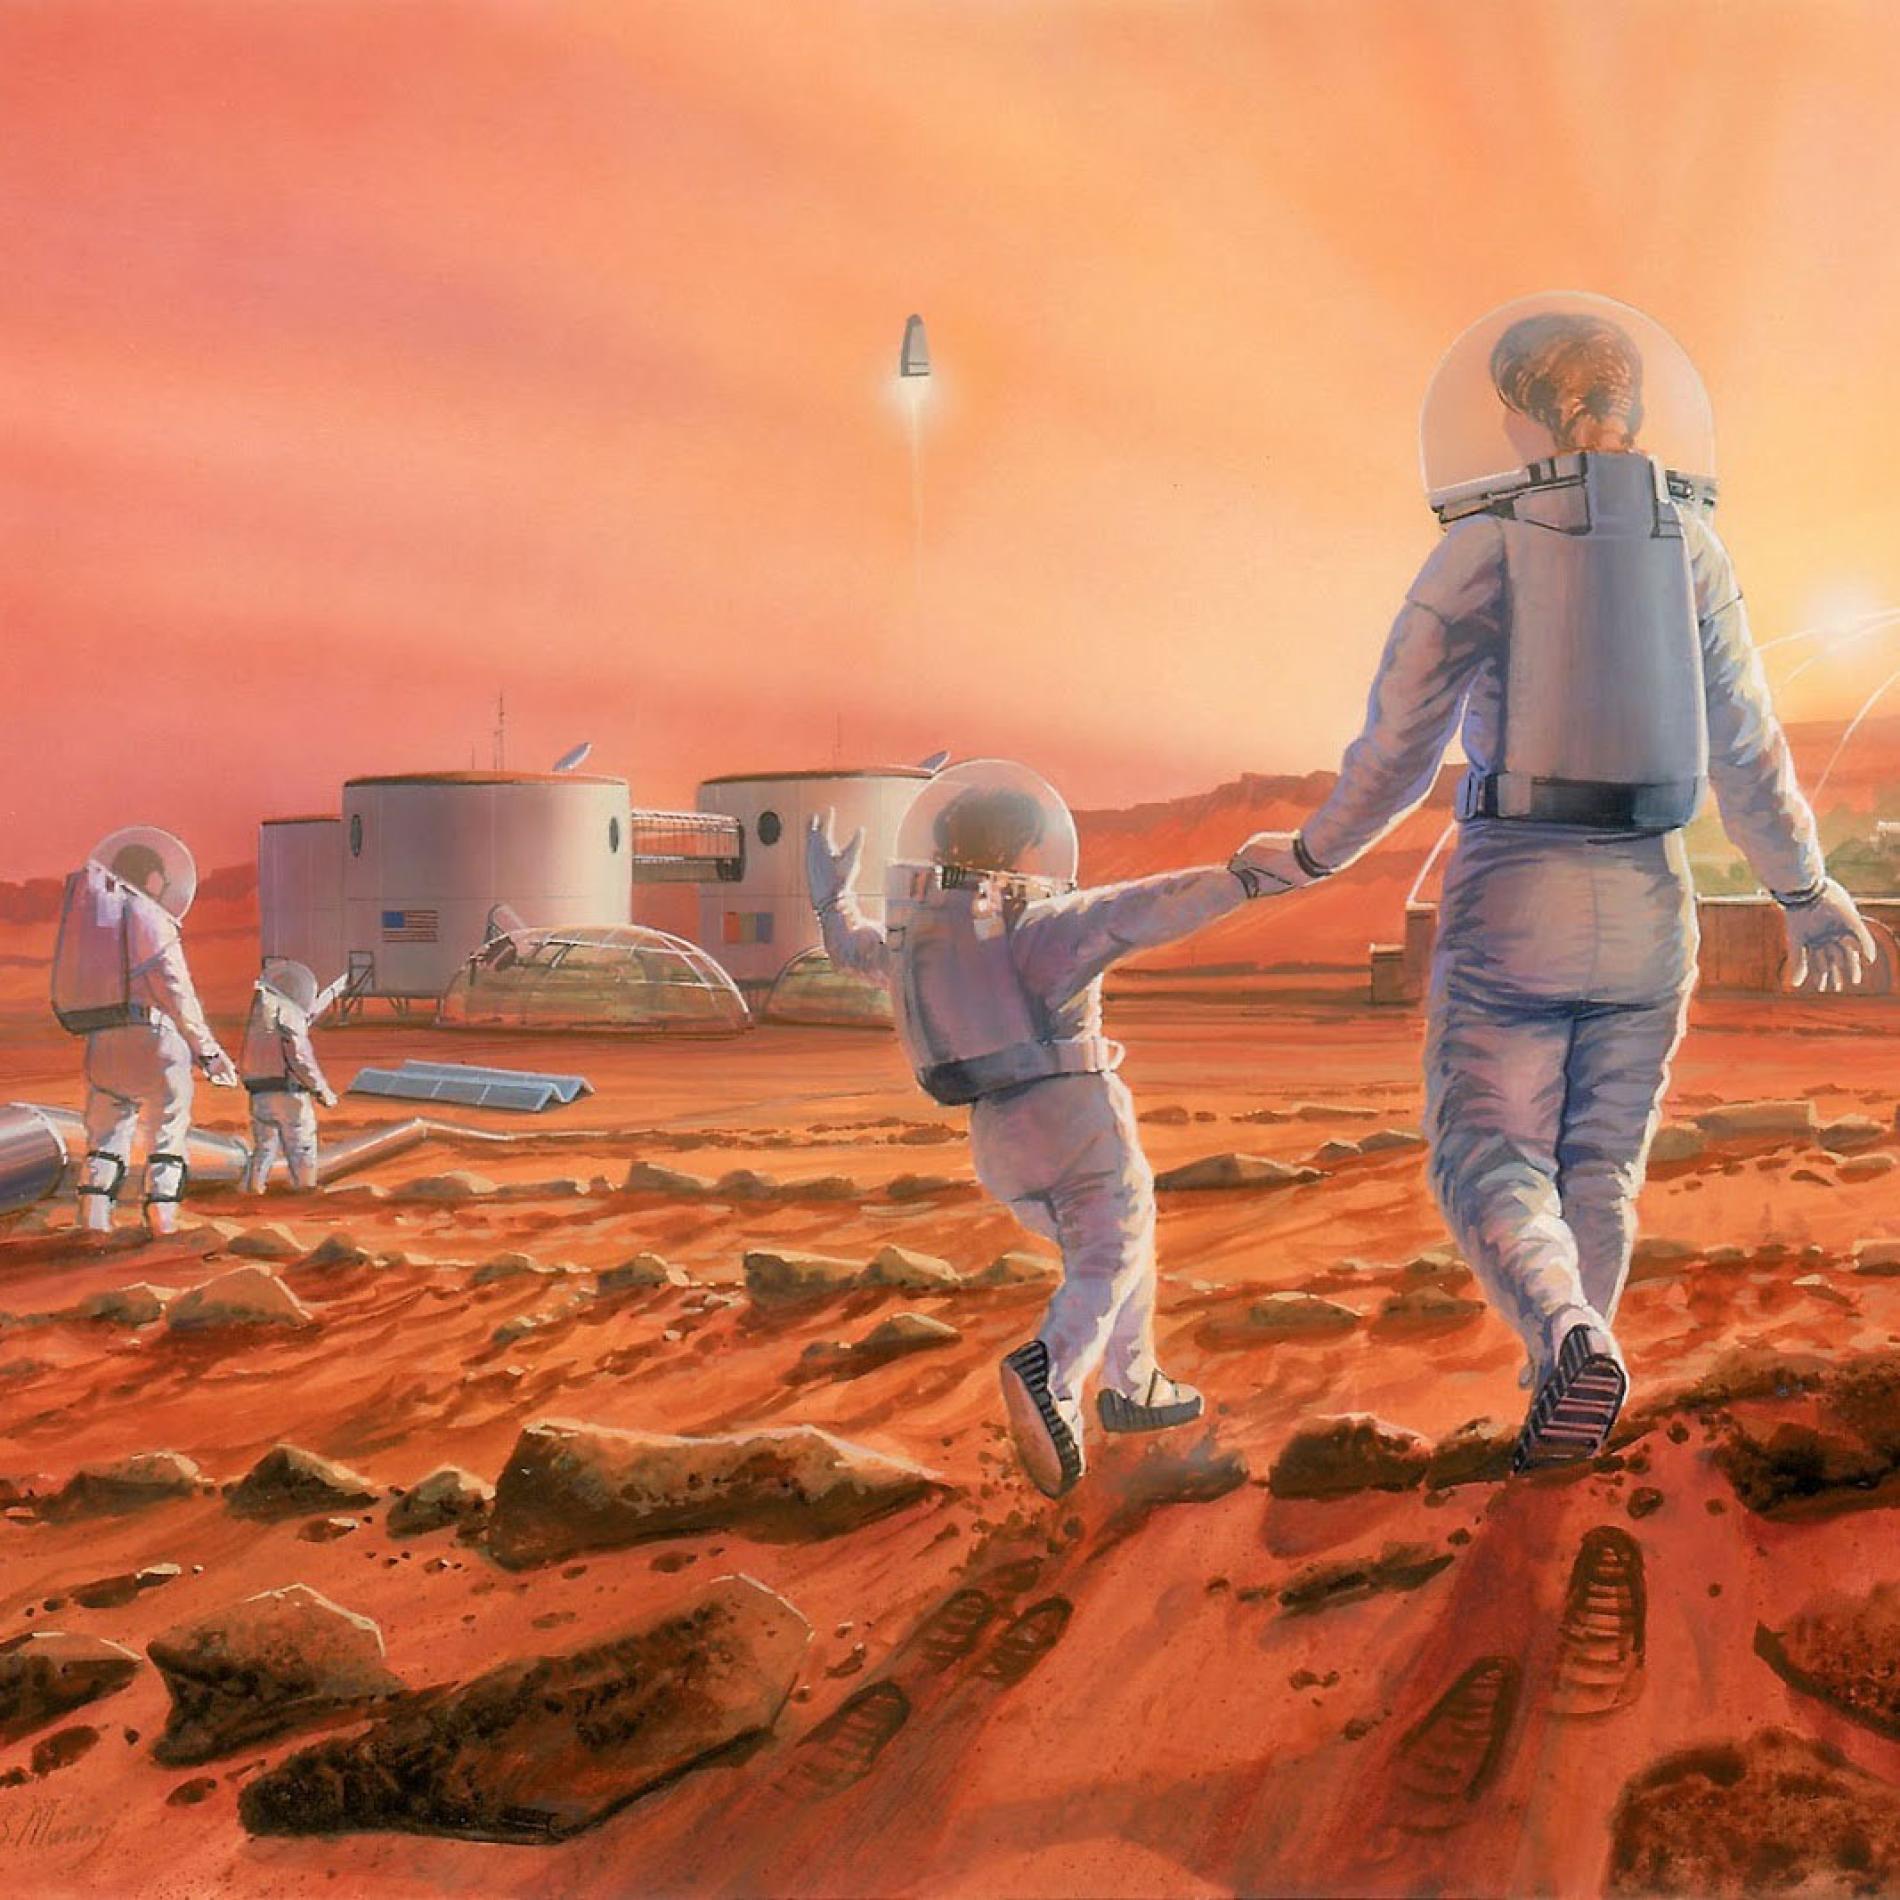 Будущая жизнь на земле. Марс Планета колонизация. Человек на другой планете. Человек с Марса. Колонизация Марса.